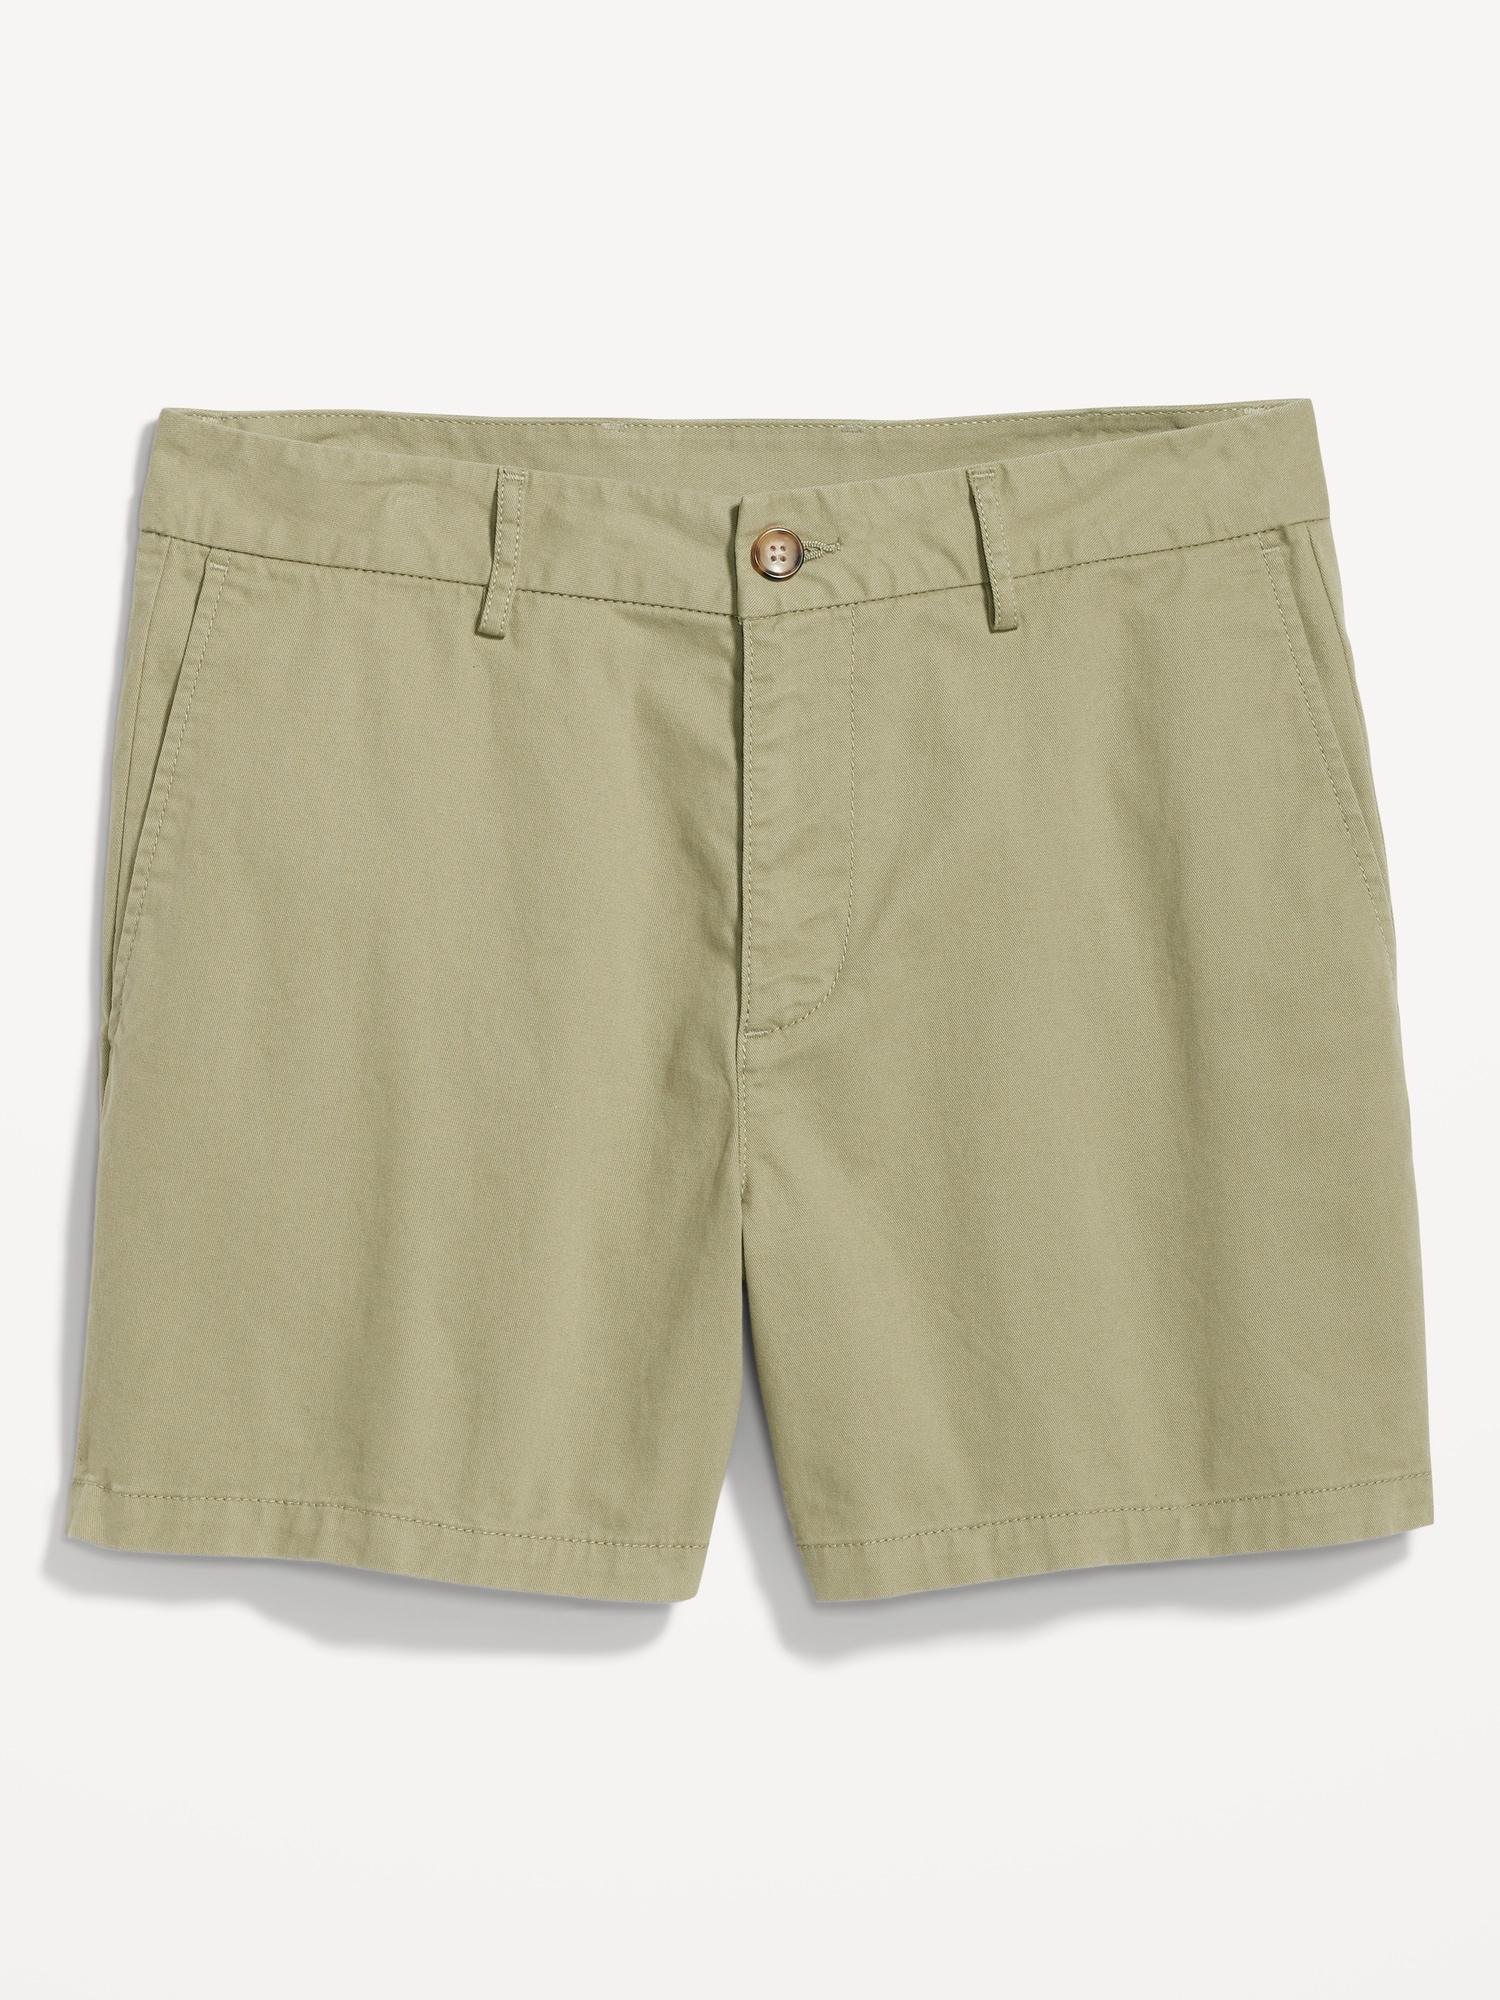 Slim Built-In Flex Rotation Chino Shorts -- 5-inch inseam | Old Navy